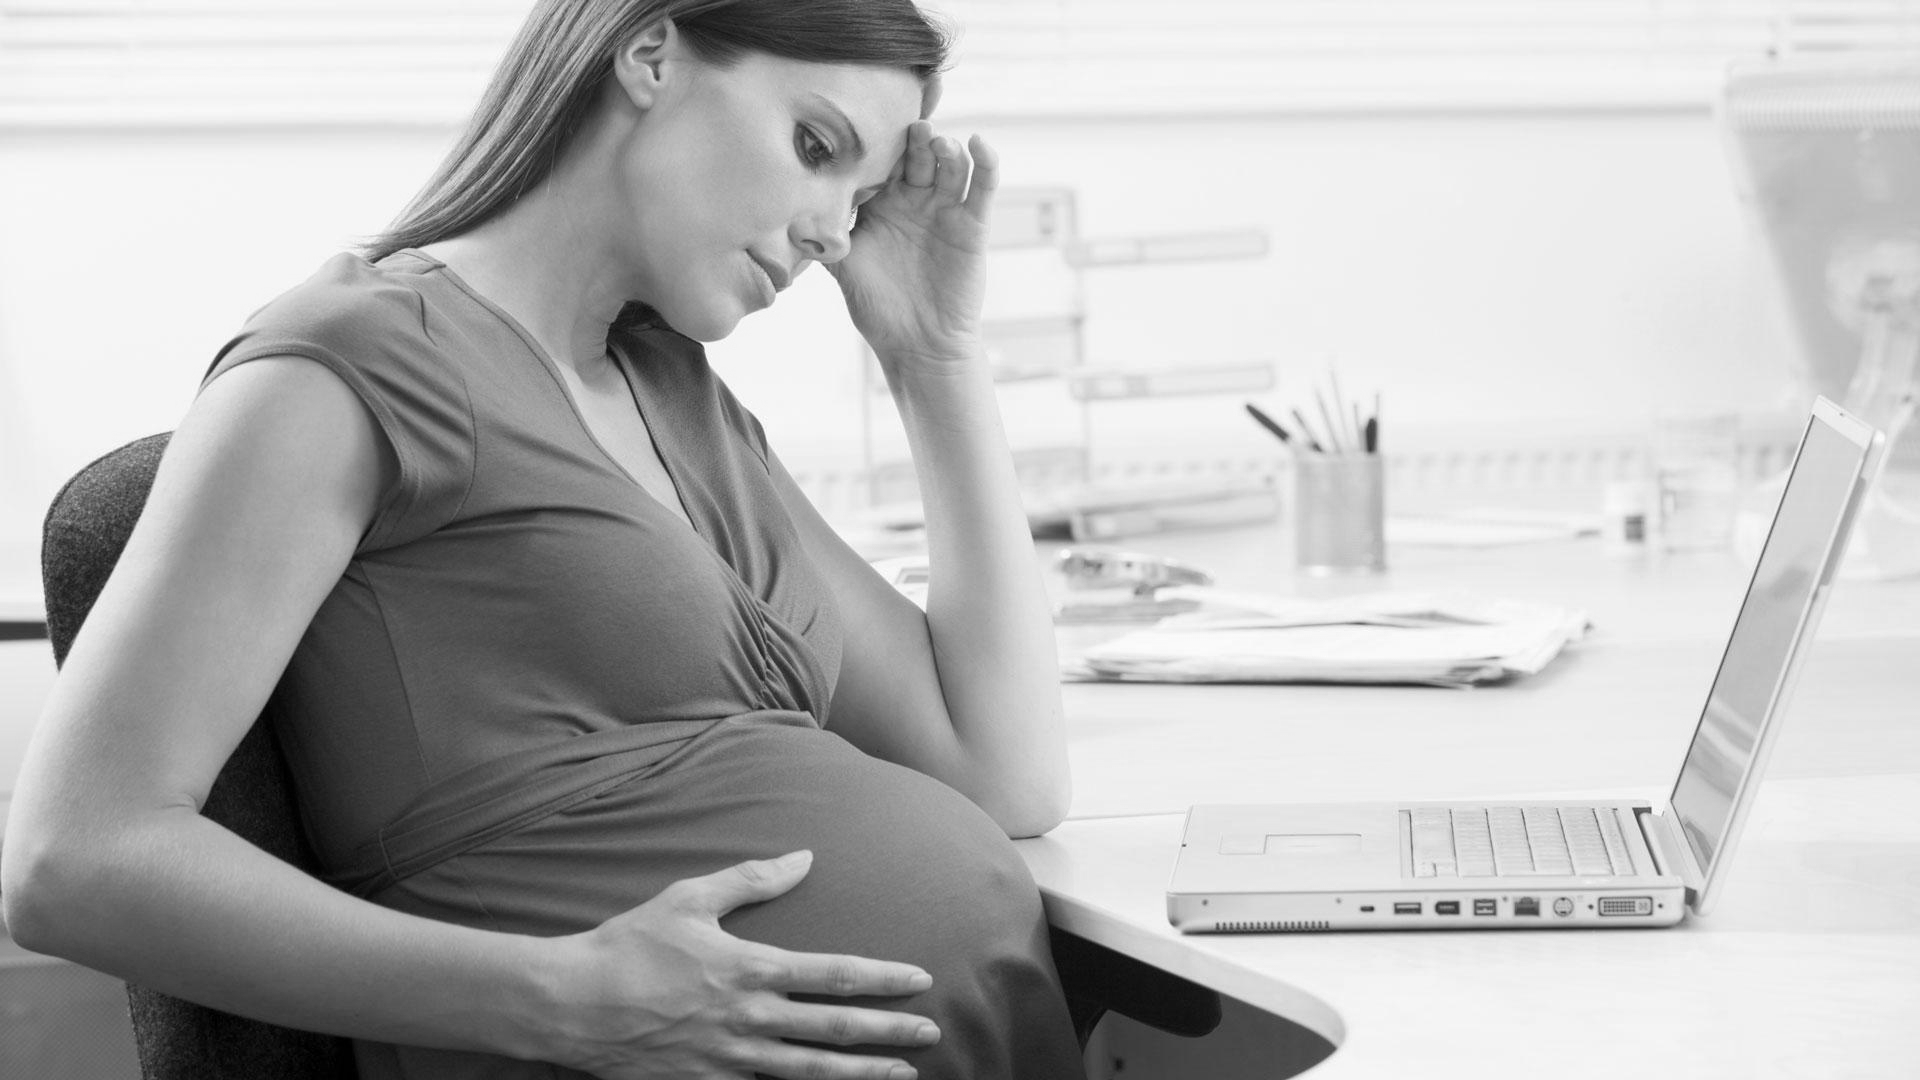 Glendale Pregnancy Discrimination Lawyer